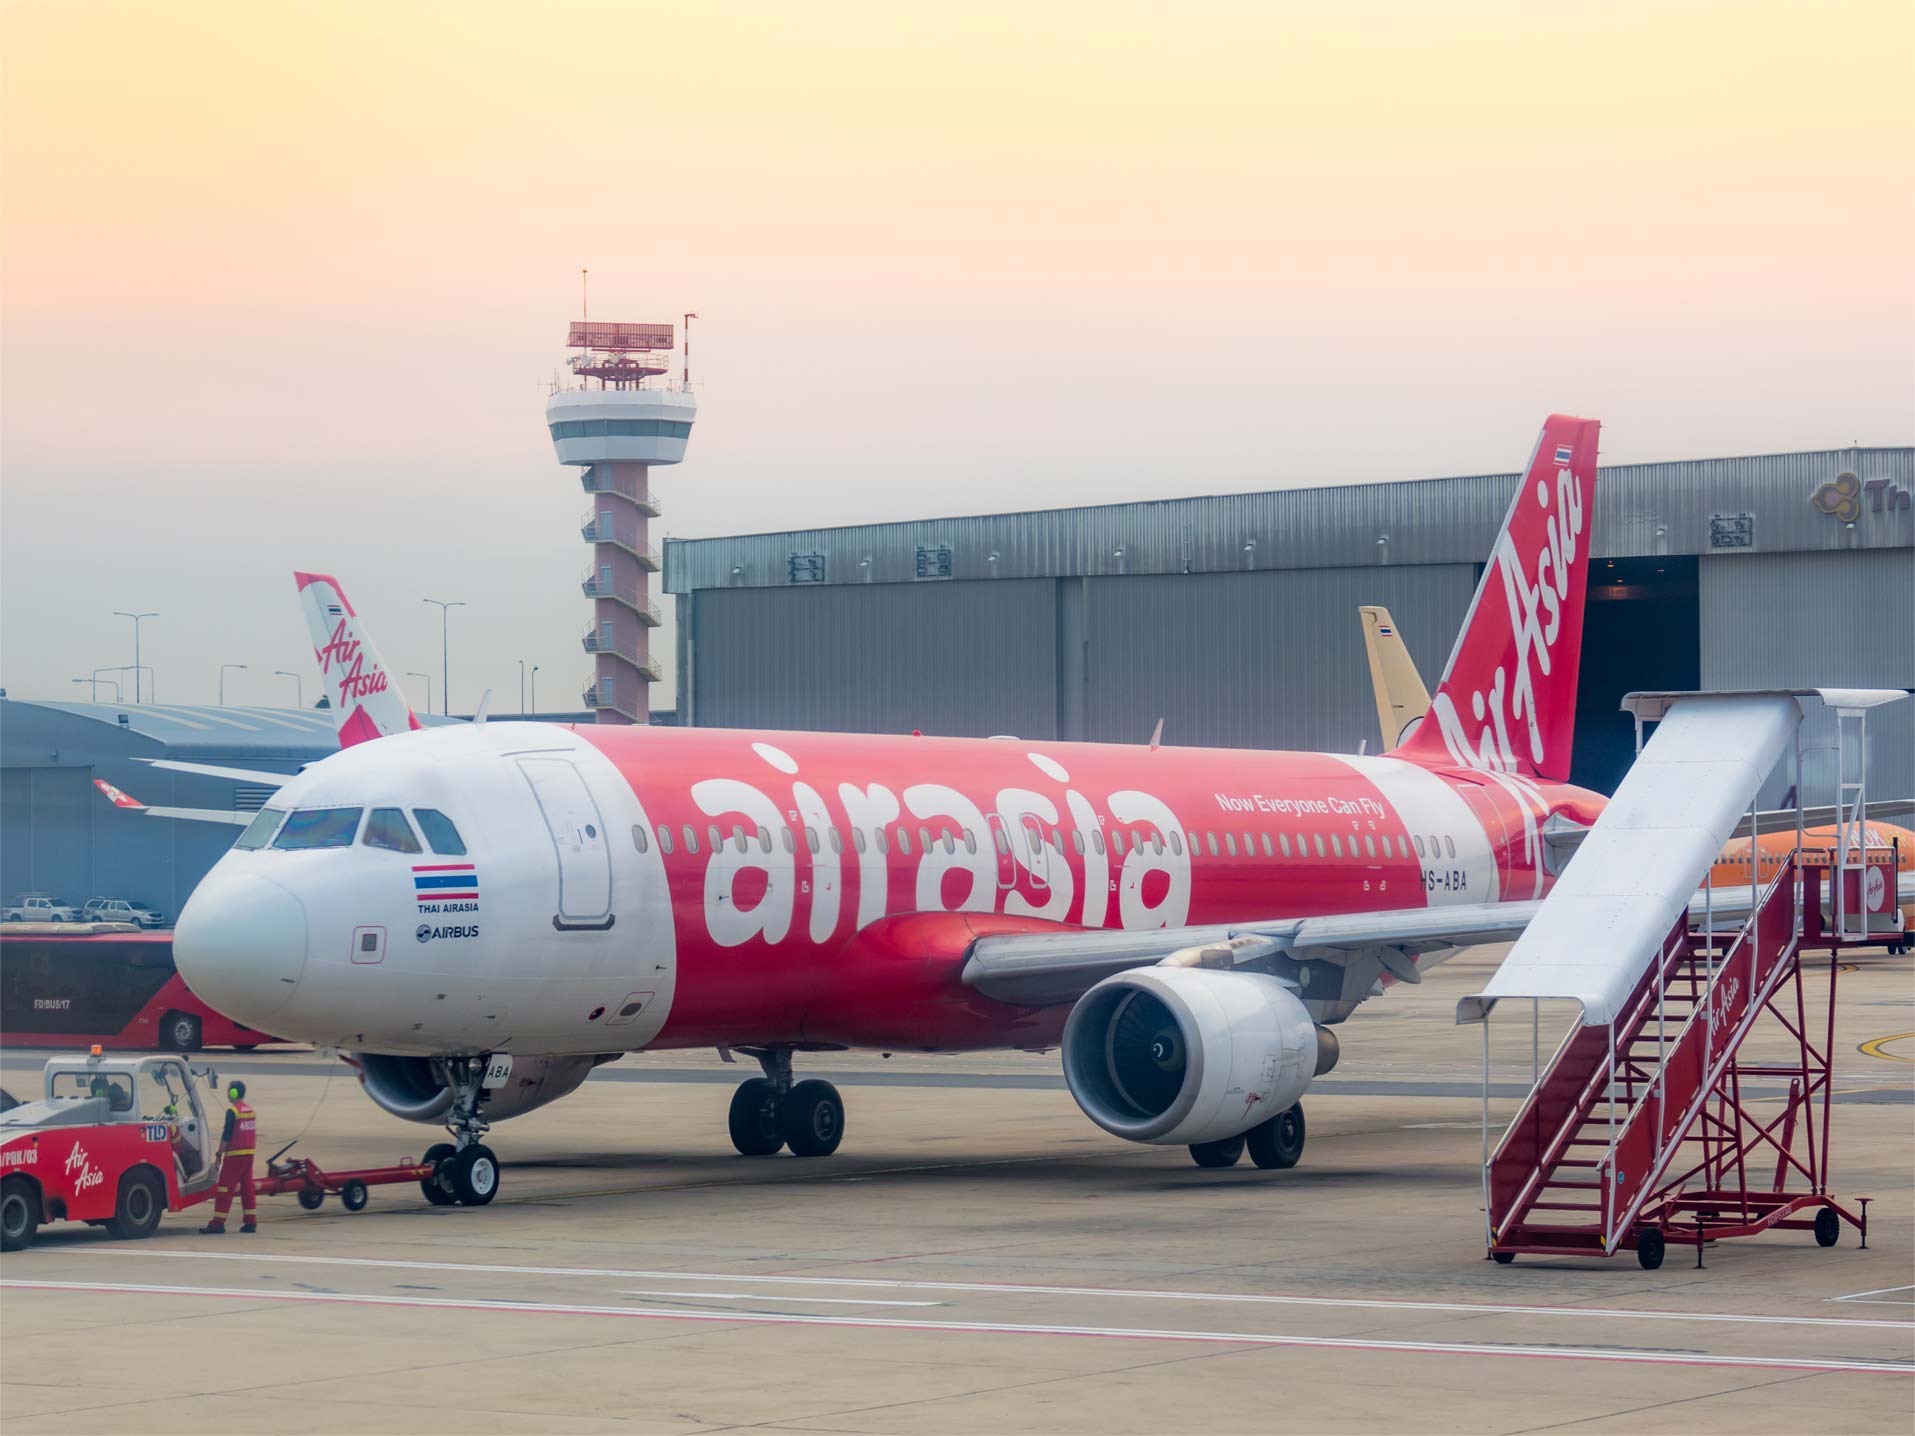 HotFlightDeals Cheap Airfares to Asia